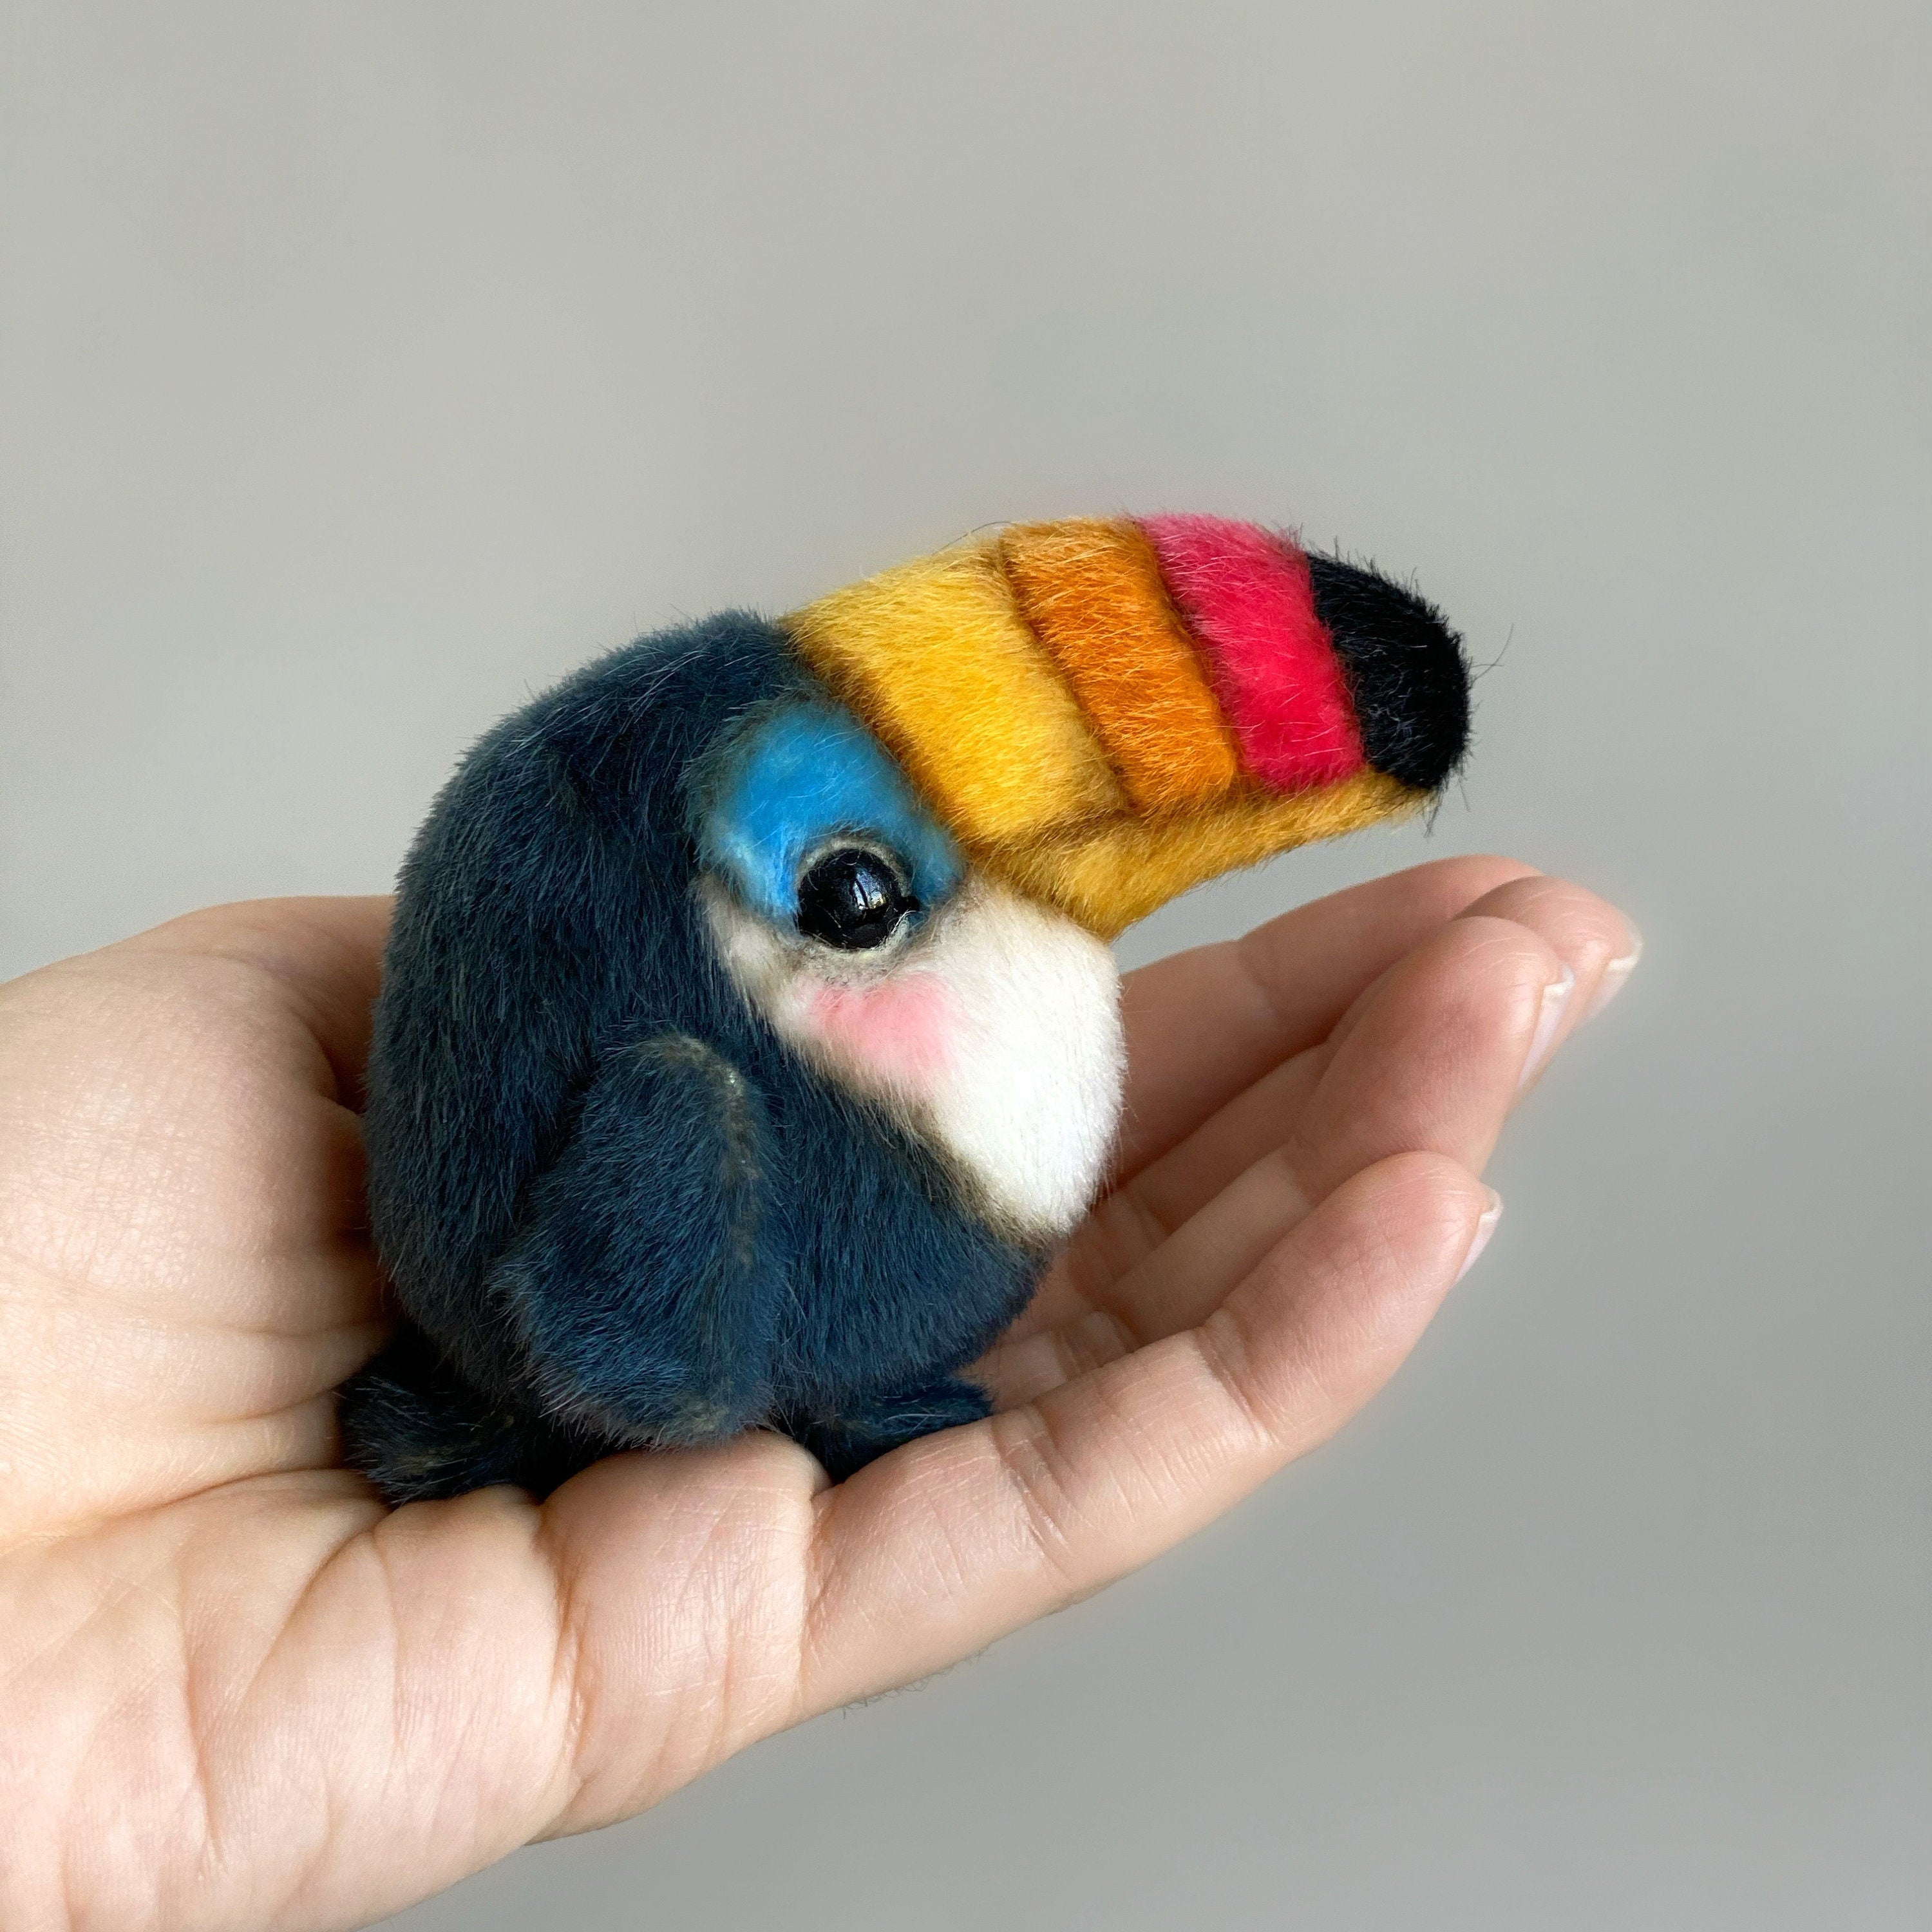 4 in 1 PATTERN Birds Owl Toucan Duck Penguin PDF sewing patterns Video tutorial DIY stuffed toy easy to sew by TSminibears